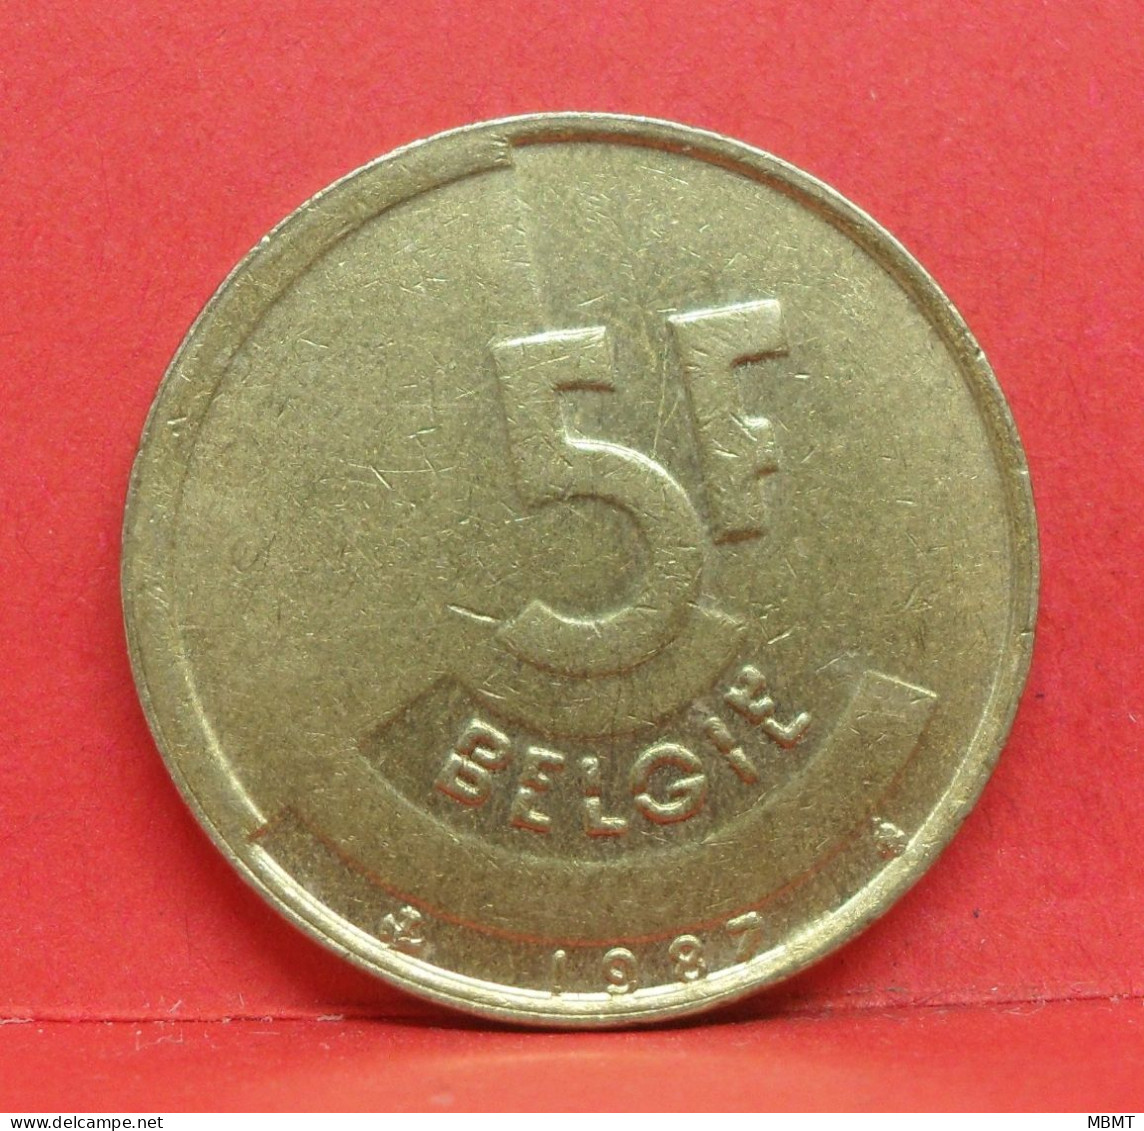 5 Frank 1987 - TTB - Pièce Monnaie Belgie - Article N°2002 - 5 Frank